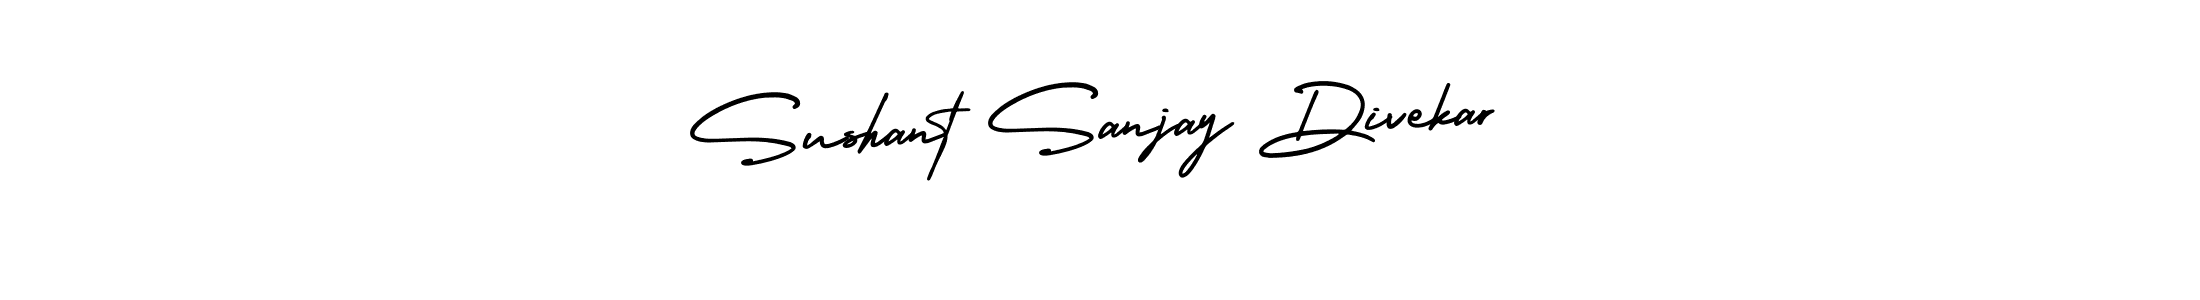 Best and Professional Signature Style for Sushant Sanjay Divekar. AmerikaSignatureDemo-Regular Best Signature Style Collection. Sushant Sanjay Divekar signature style 3 images and pictures png